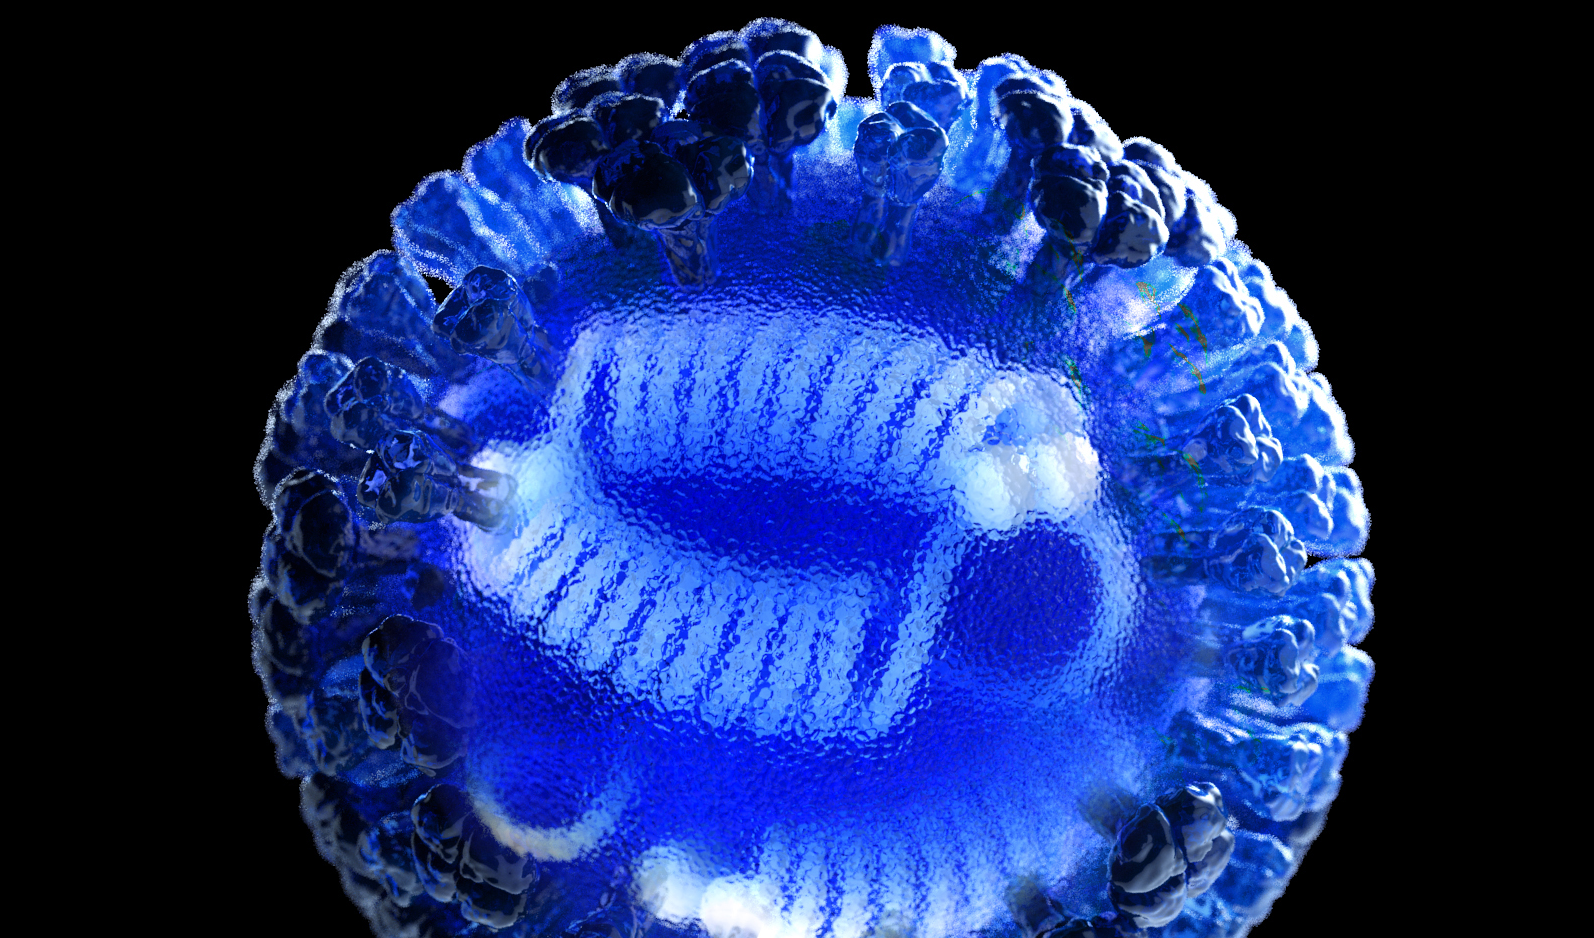 3D computer-generated rendering of an influenza virus